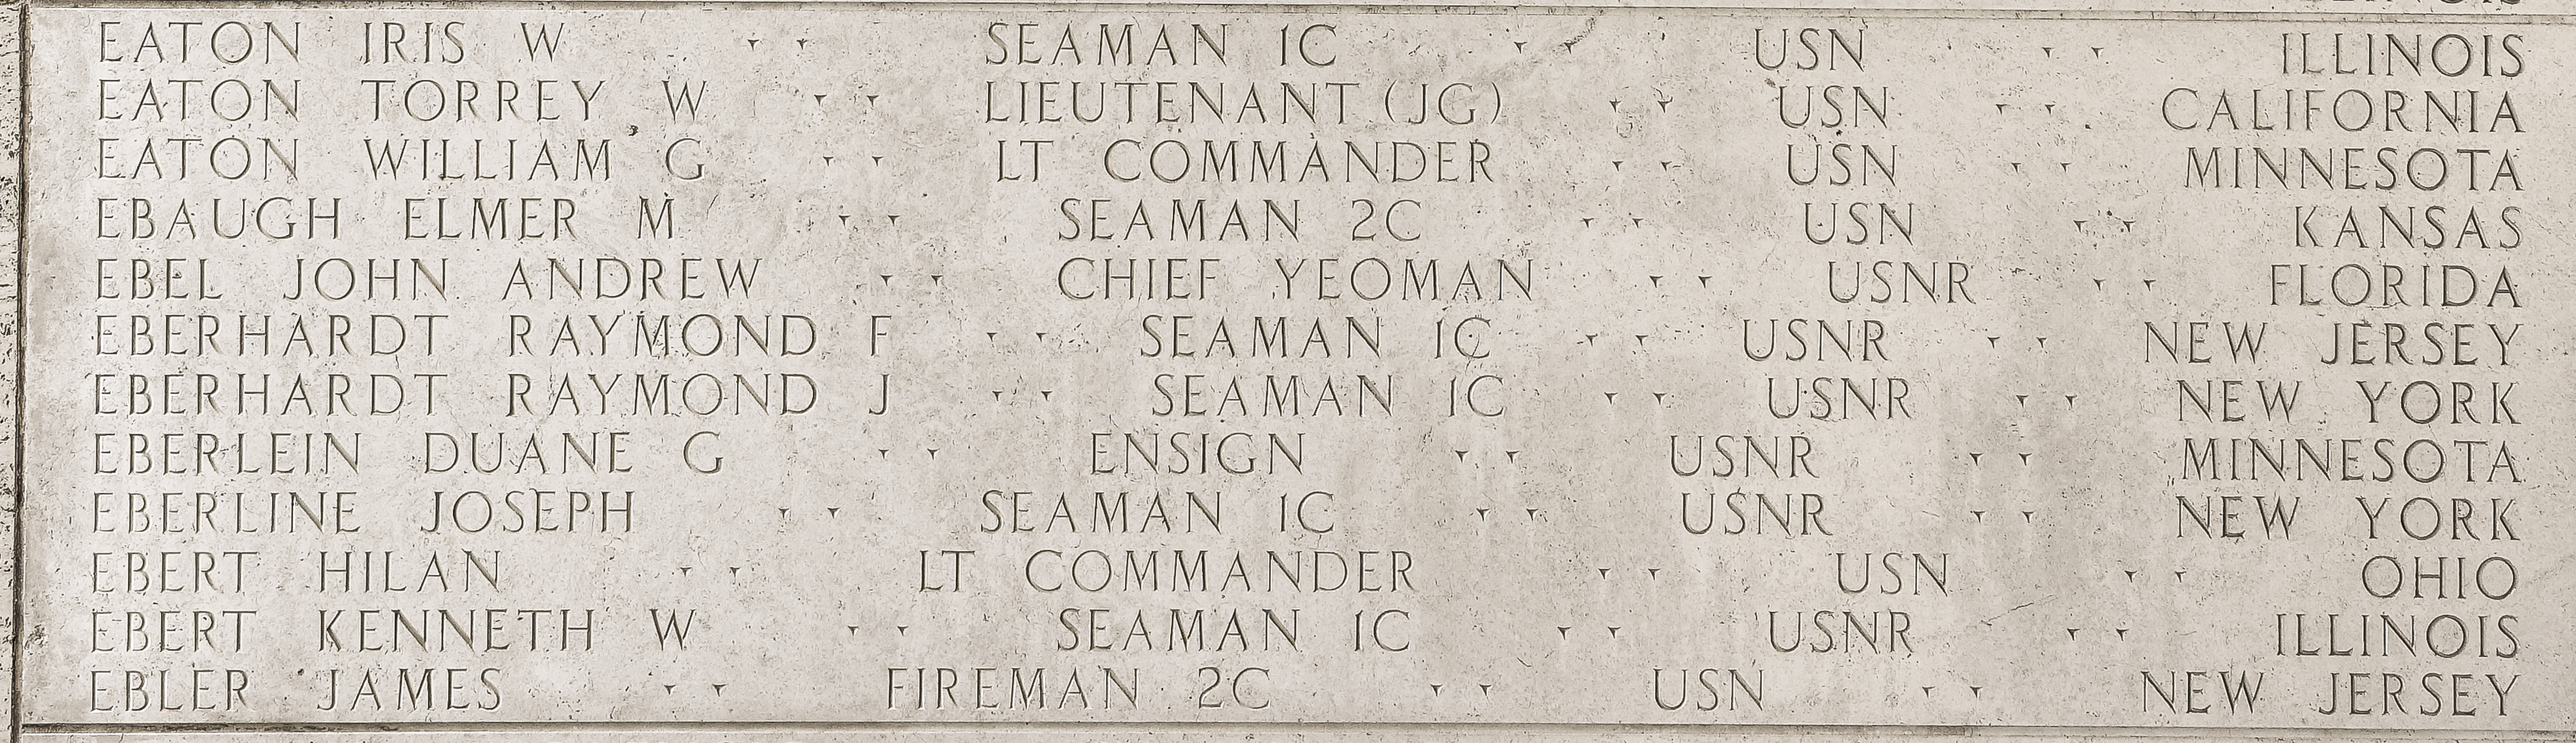 Raymond F. Eberhardt, Seaman First Class